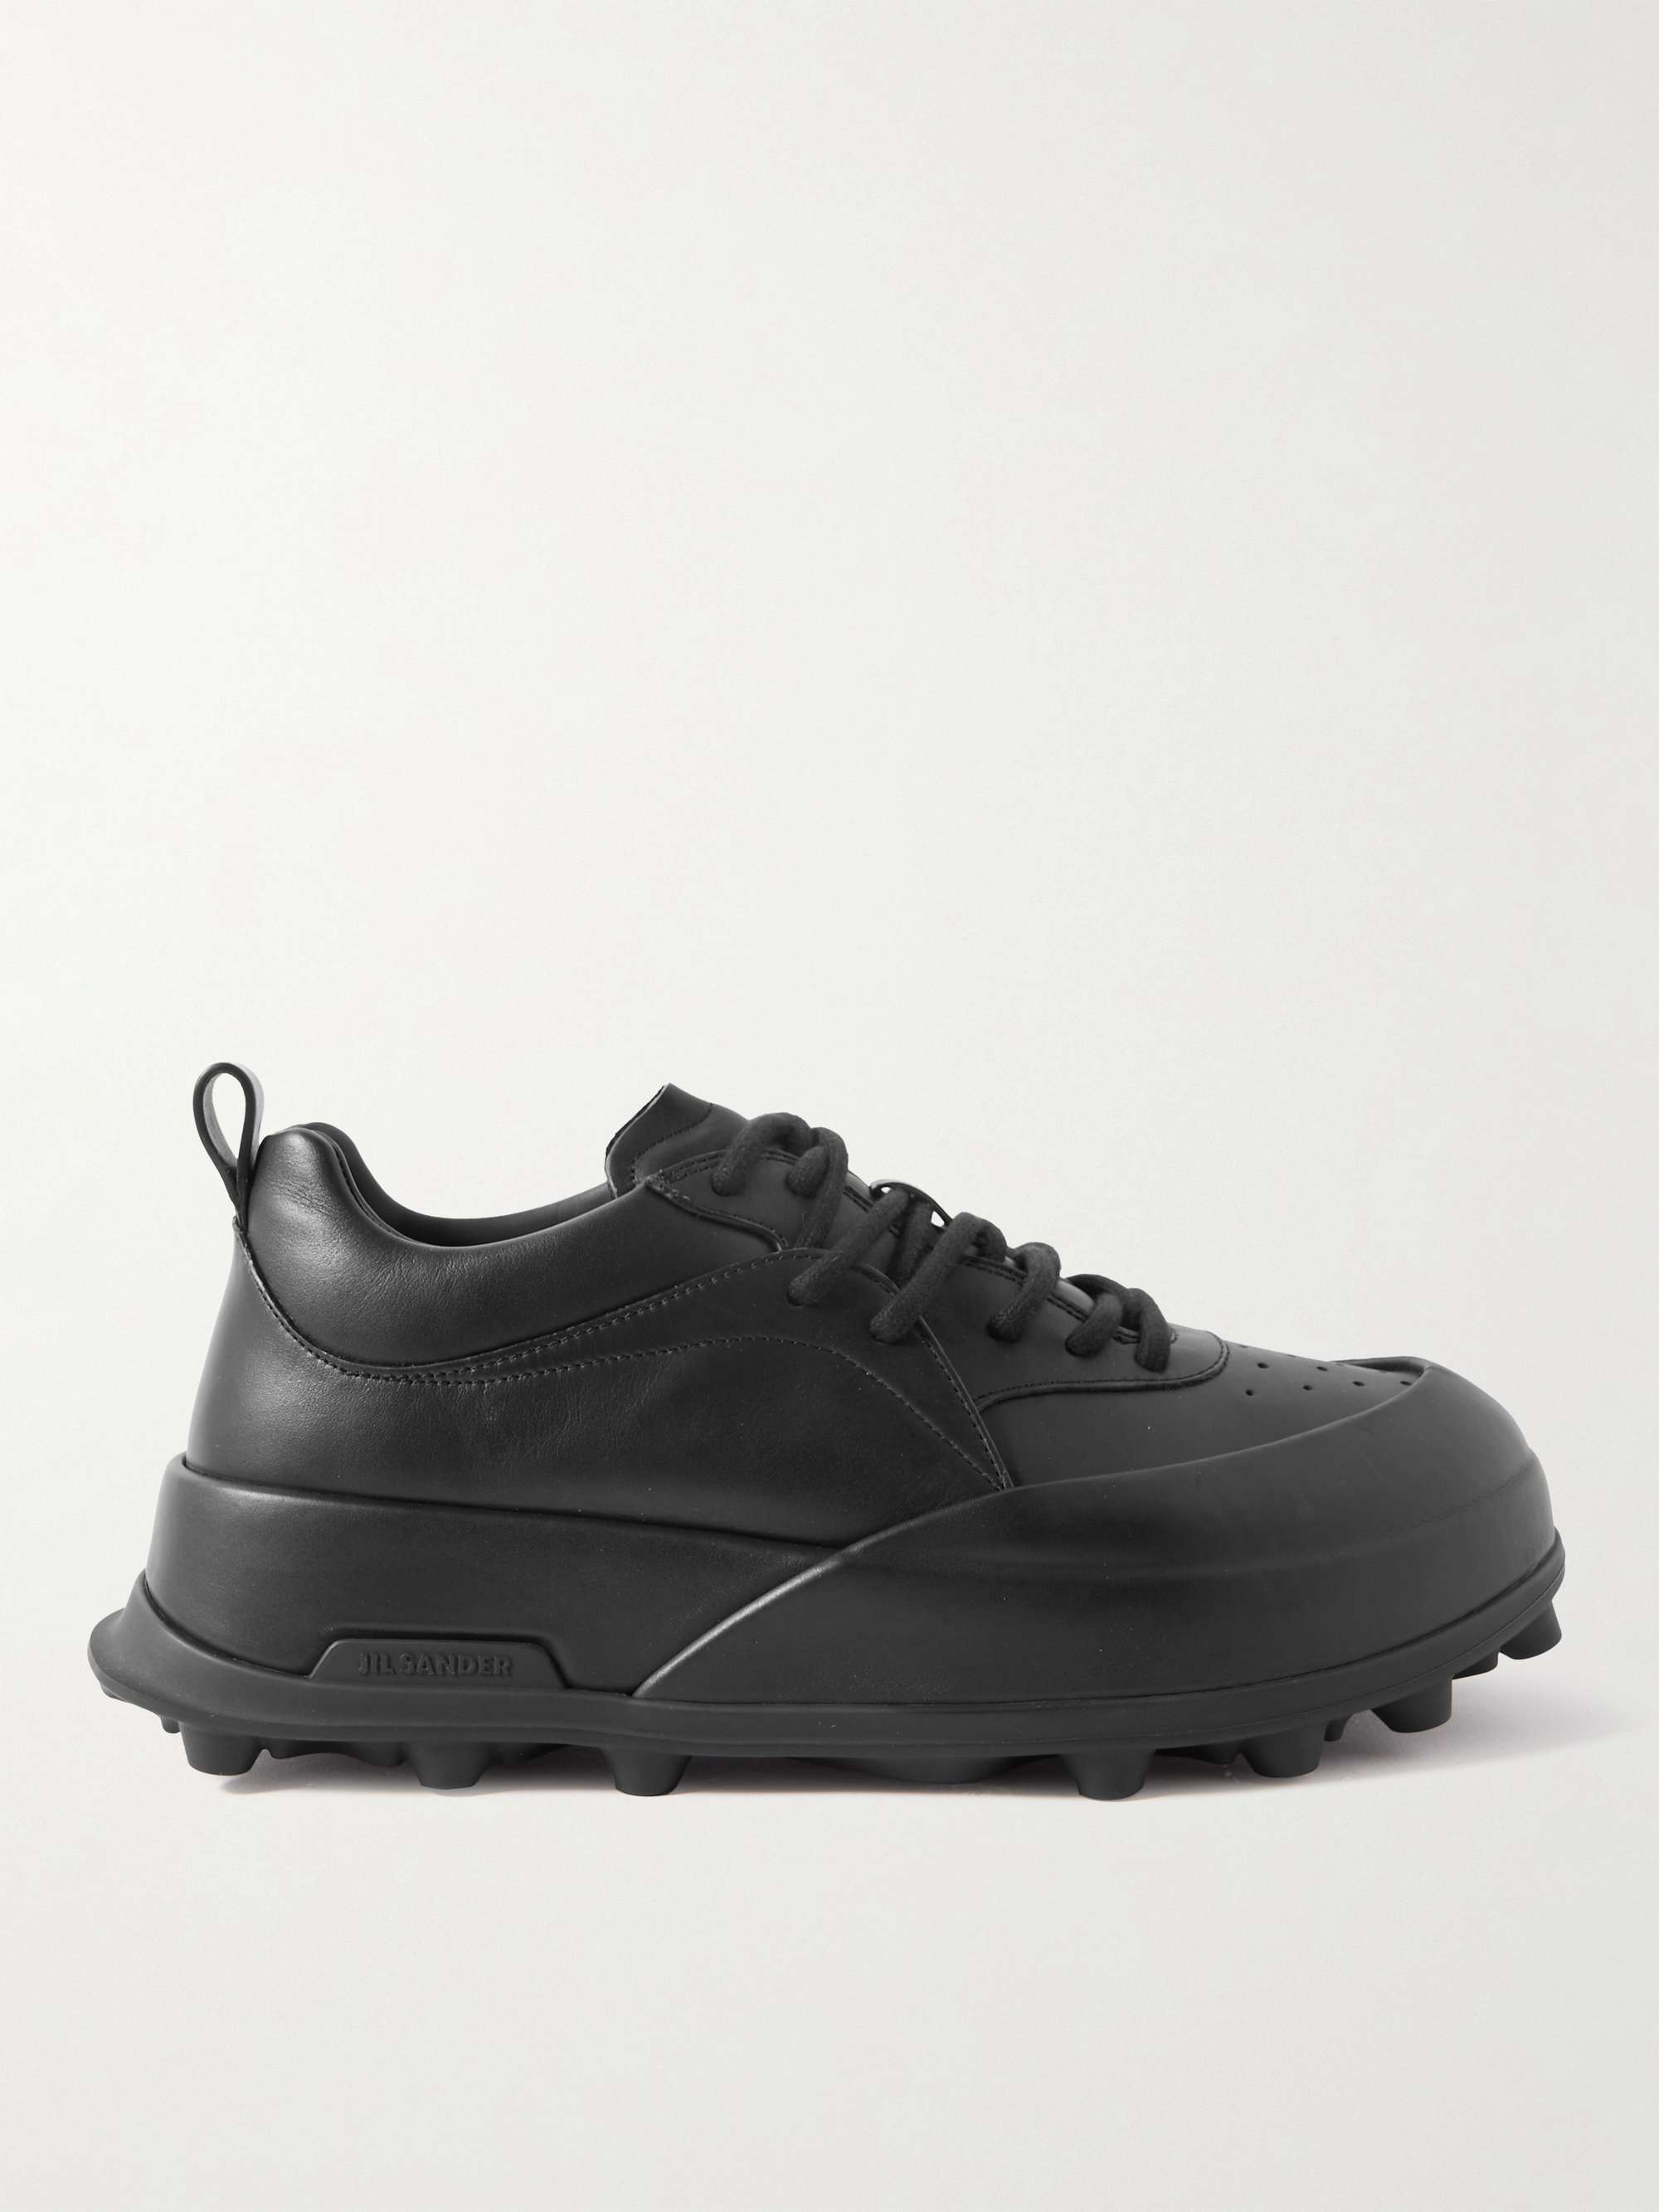 JIL SANDER Orb Leather Sneakers for Men | MR PORTER